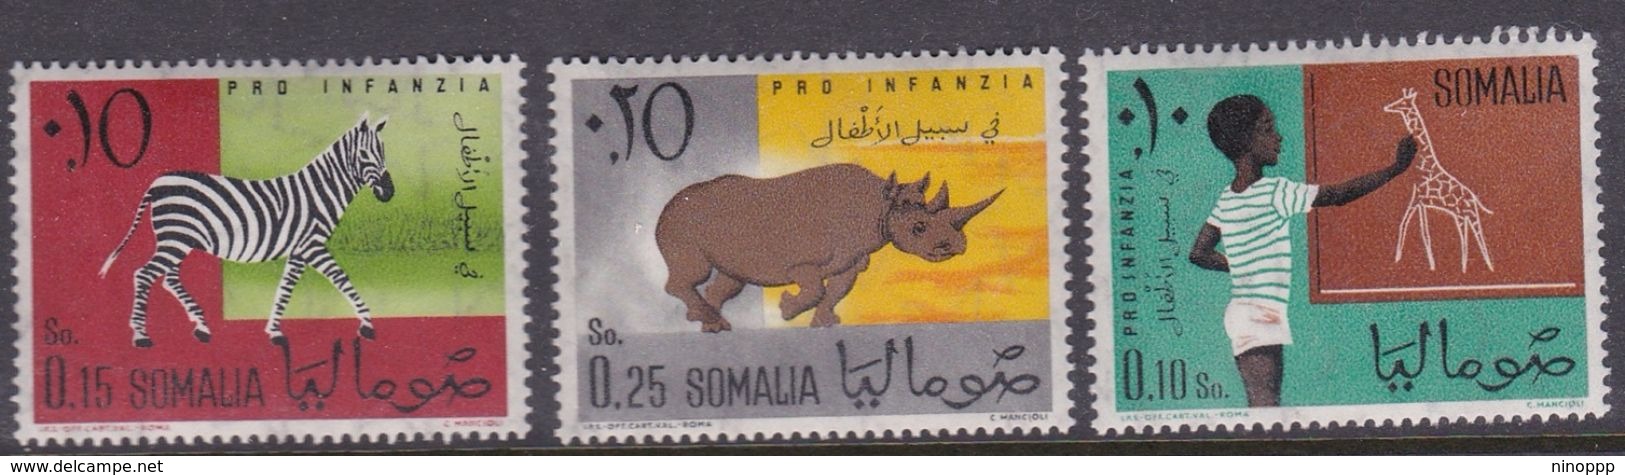 Somalia Scott 245-247 1960 Animals, Mint Never Hinged - Somalia (AFIS)